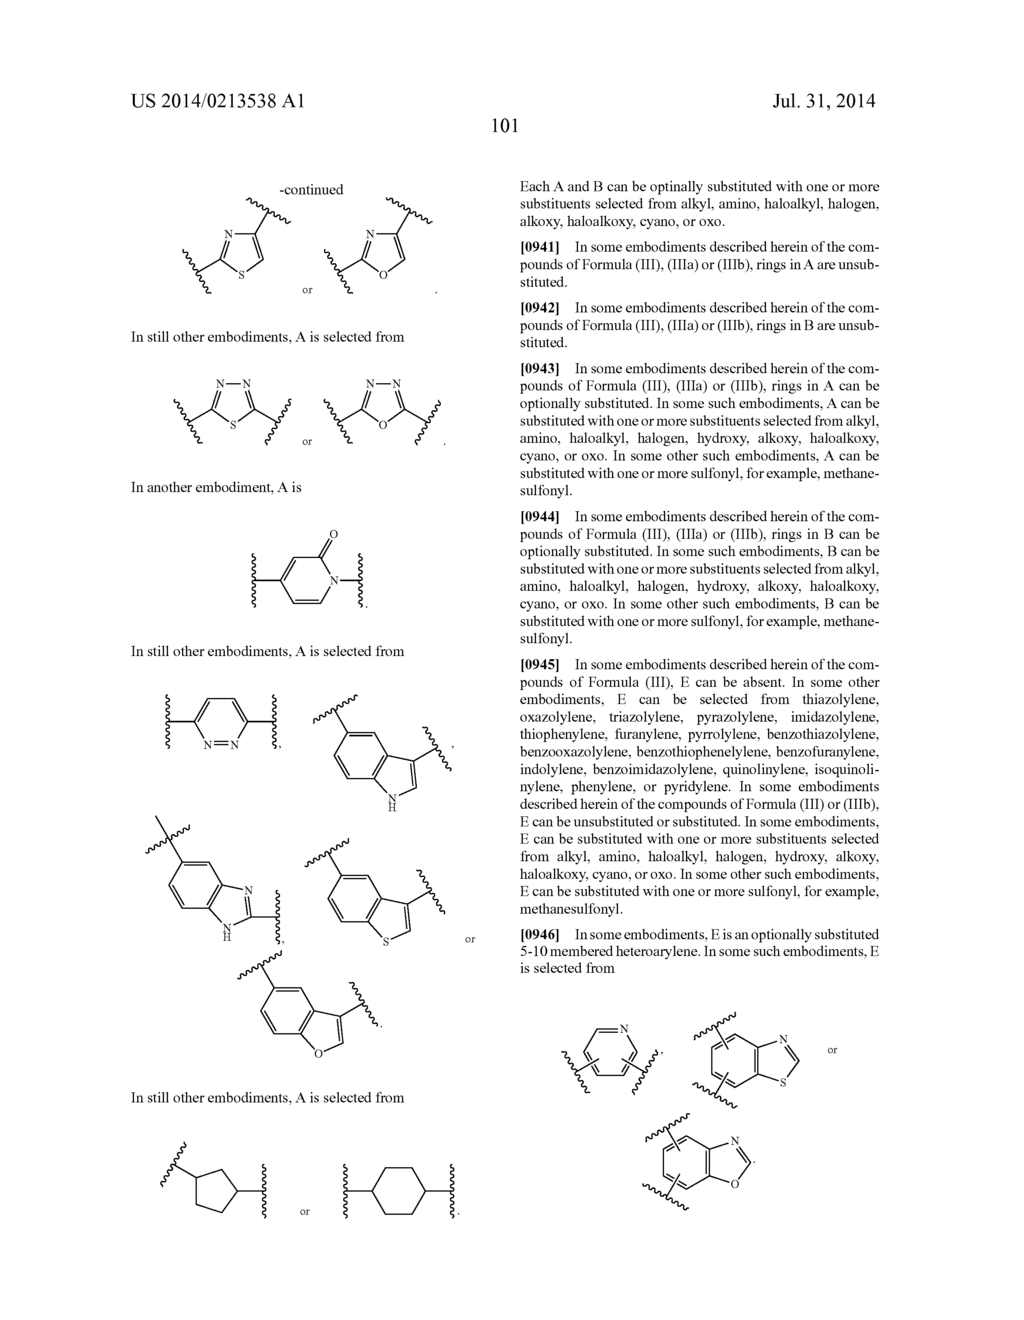 LYSOPHOSPHATIDIC ACID RECEPTOR ANTAGONISTS - diagram, schematic, and image 102